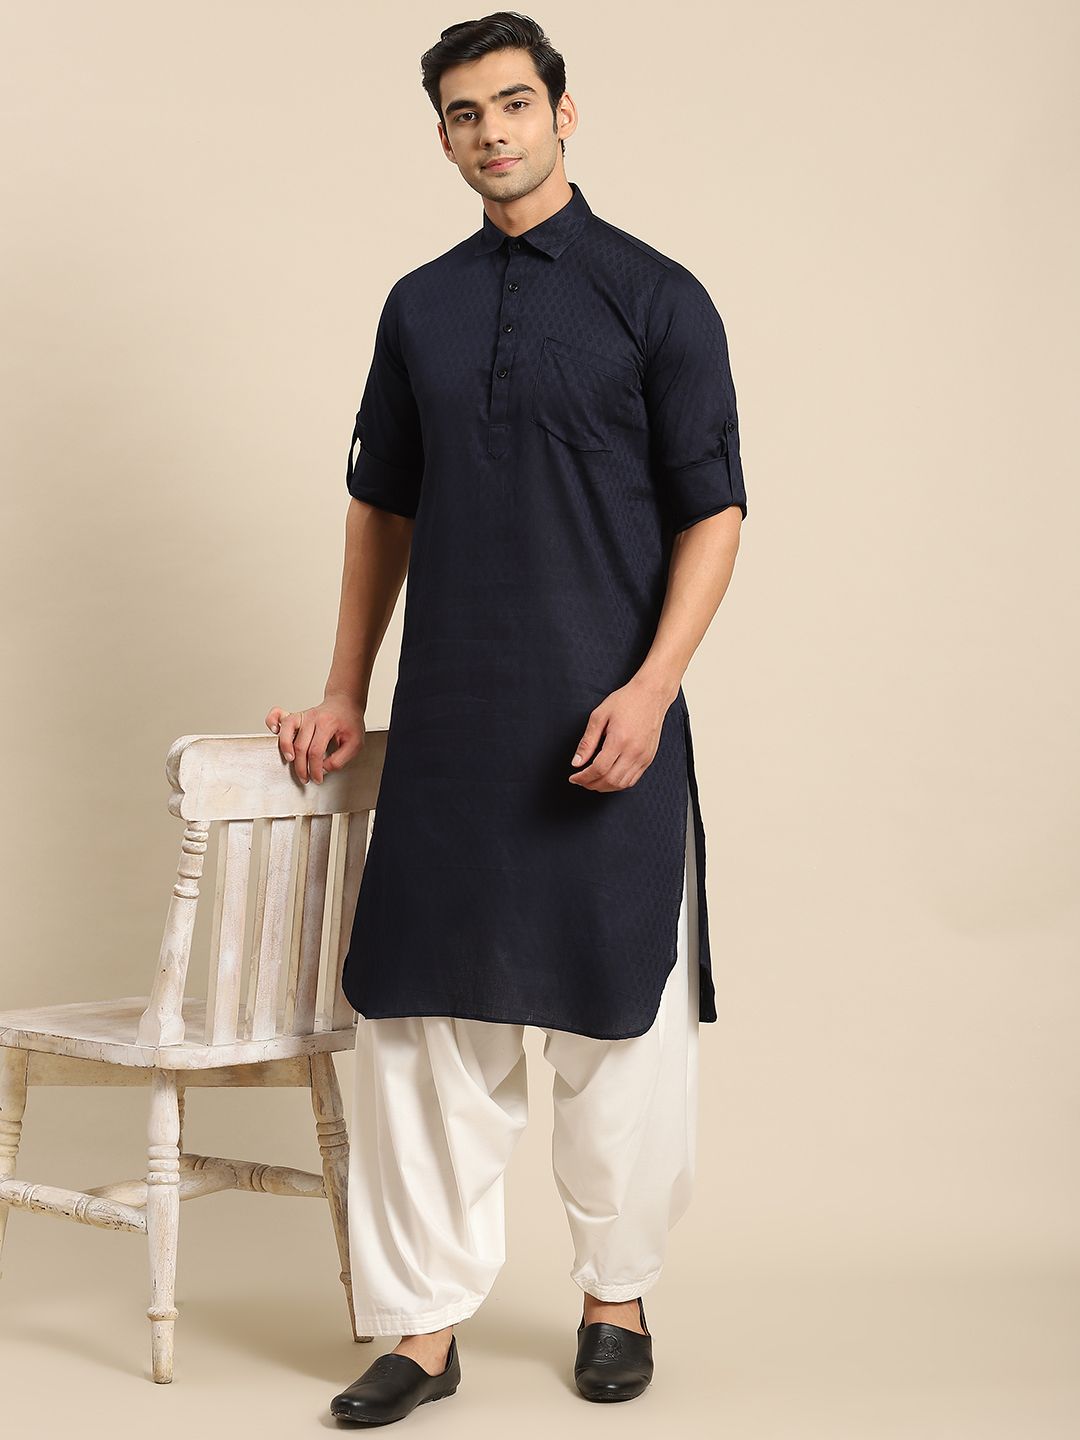 Buy Classy Pathani Kurta Designs Online India, USA - Sachin's